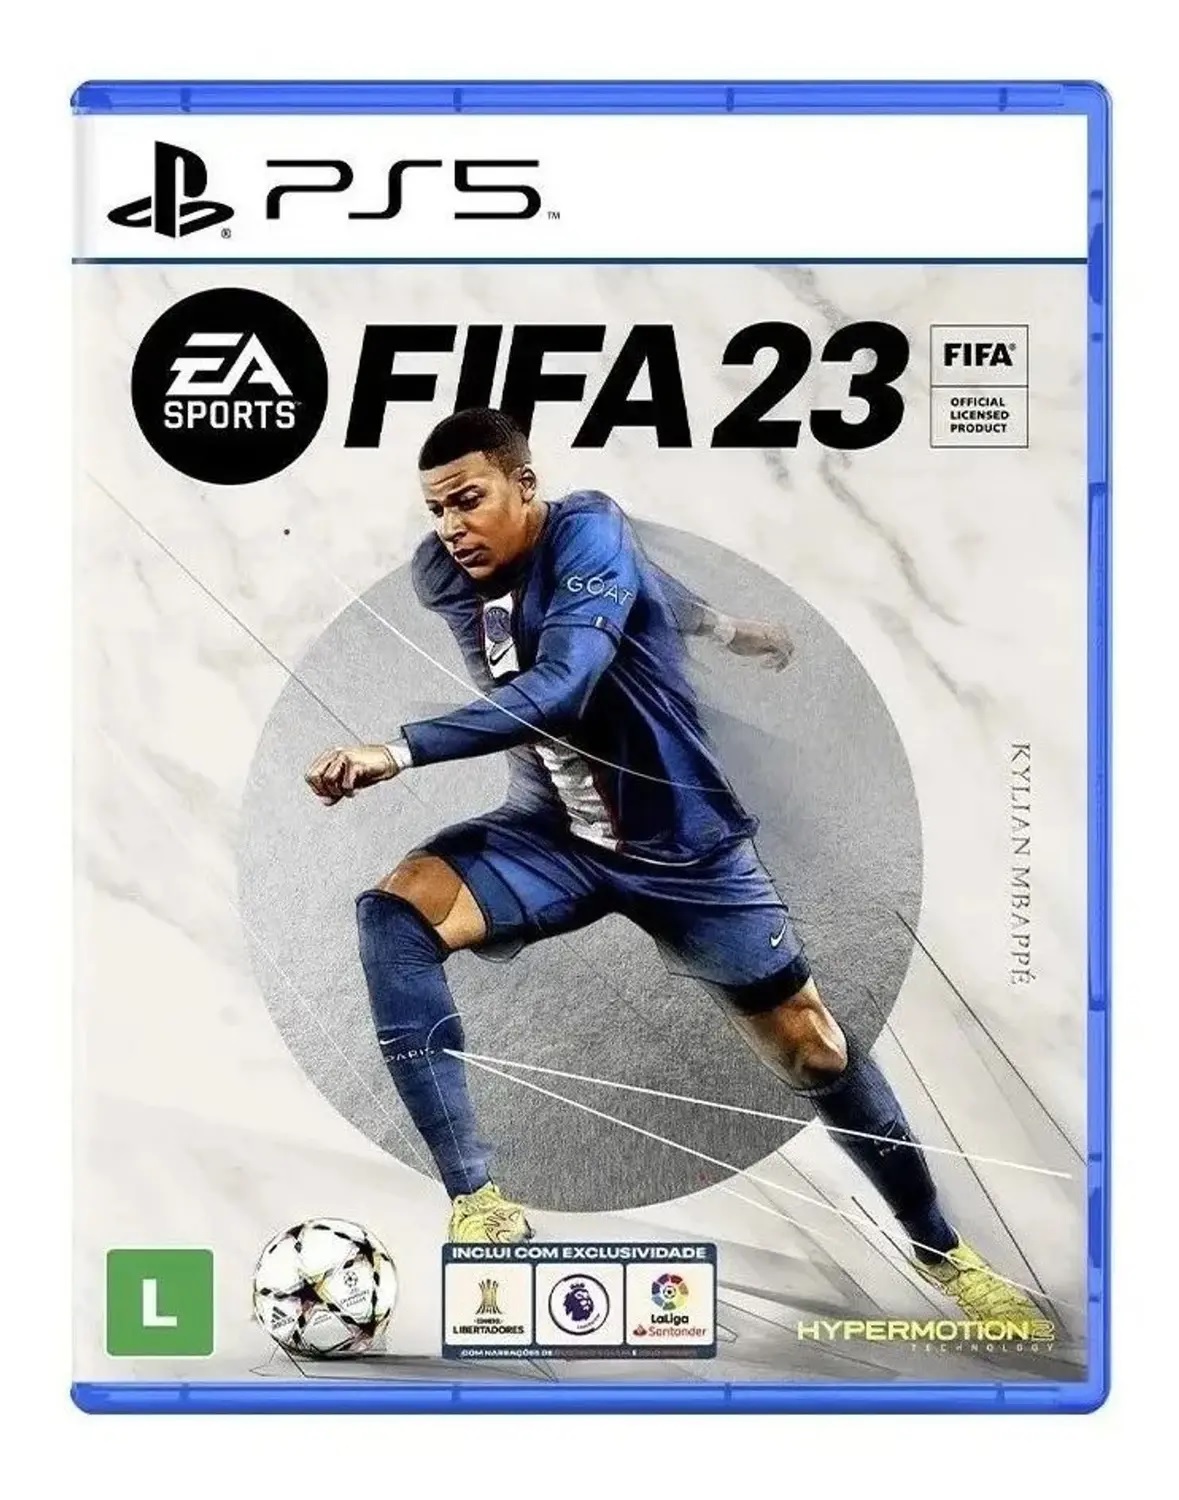 FIFA 23 Steam Deck 